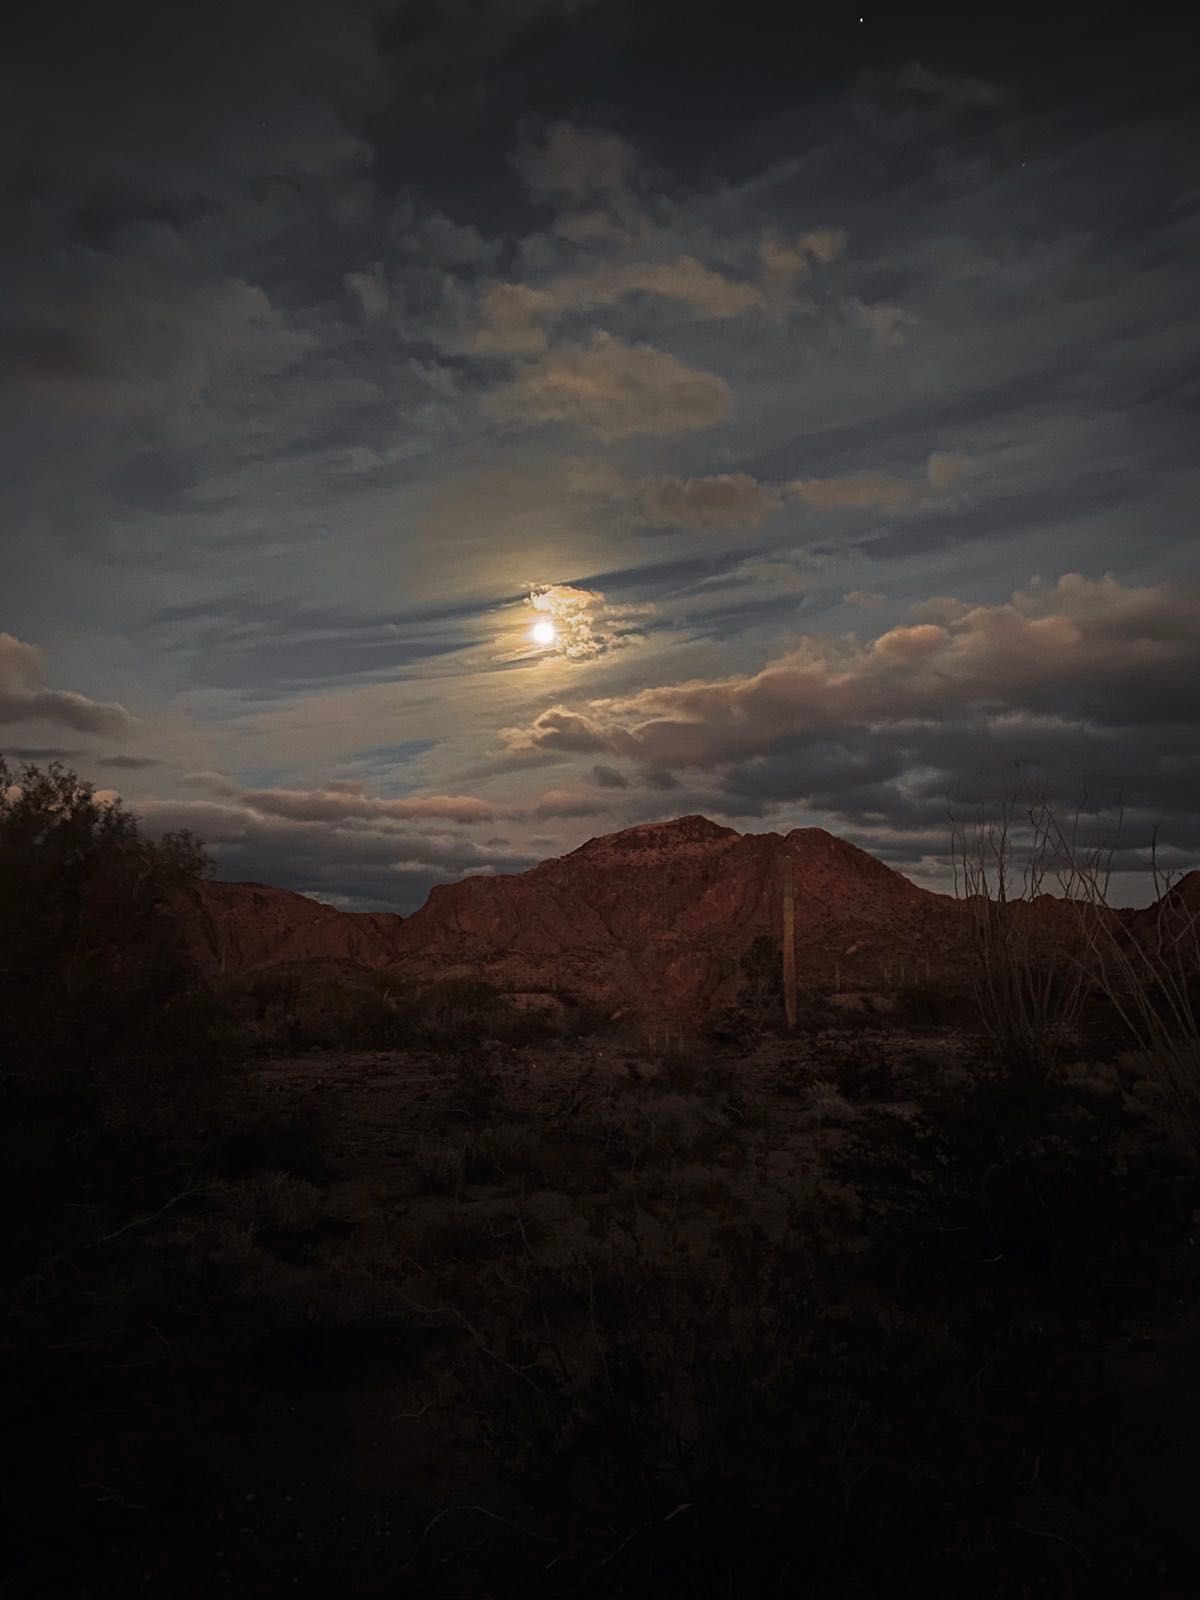 moonlit sky over the kofa mountains in arizona